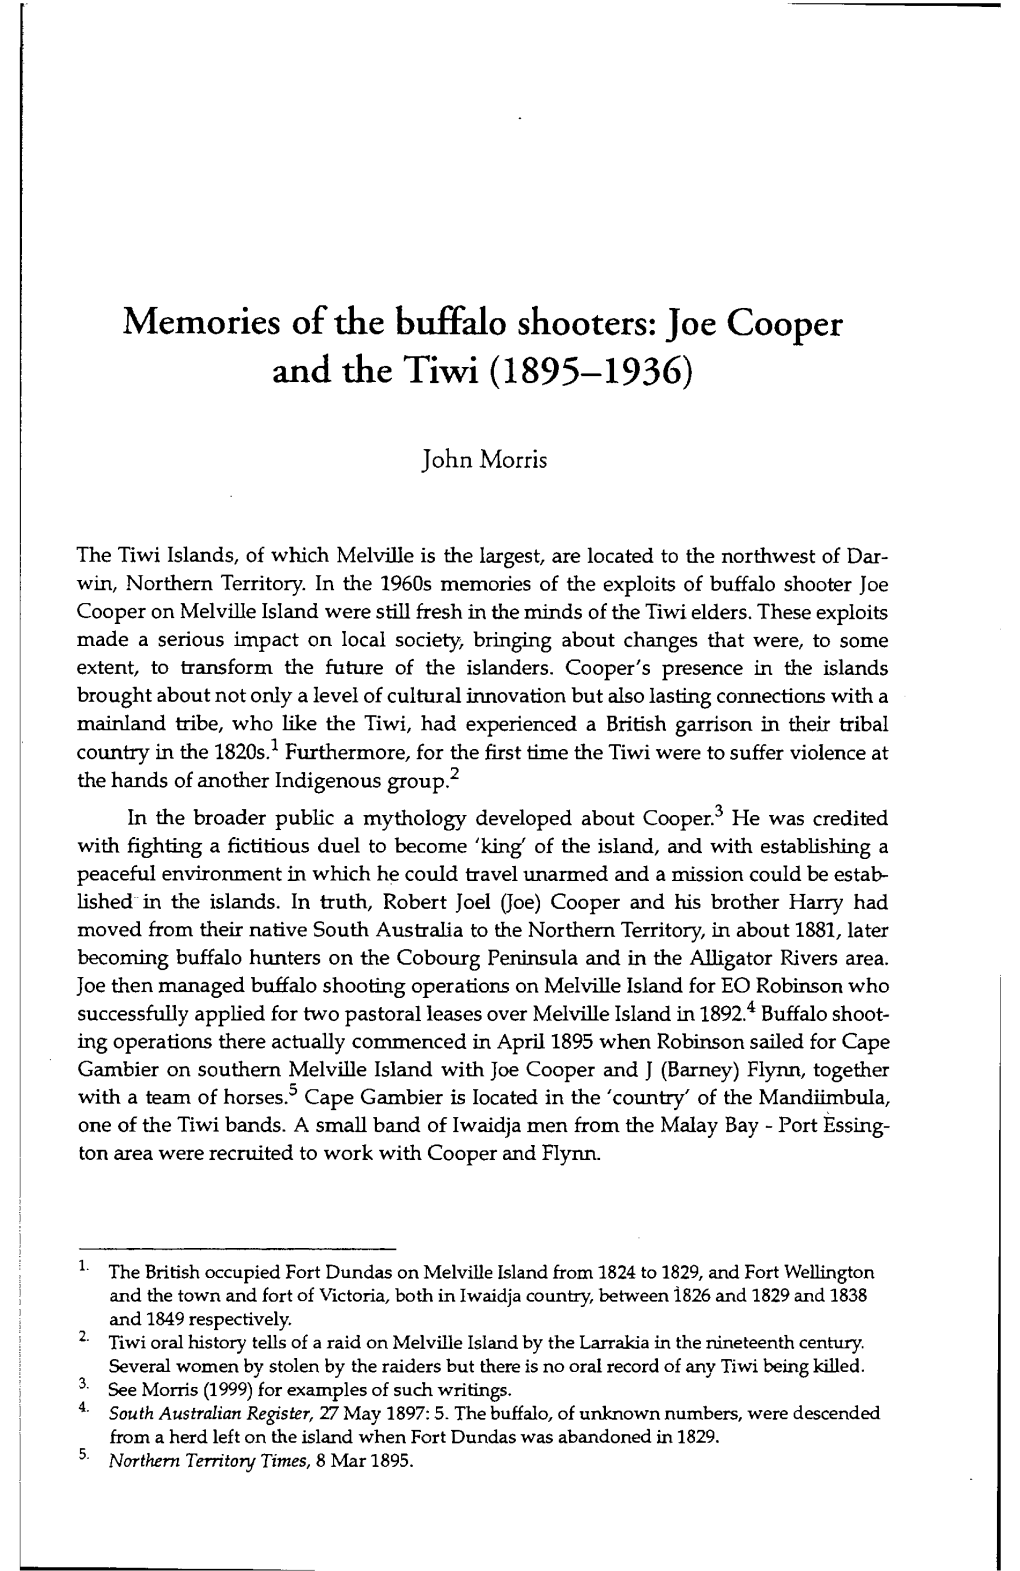 Joe Cooper and the Tiwi (1895—1936)